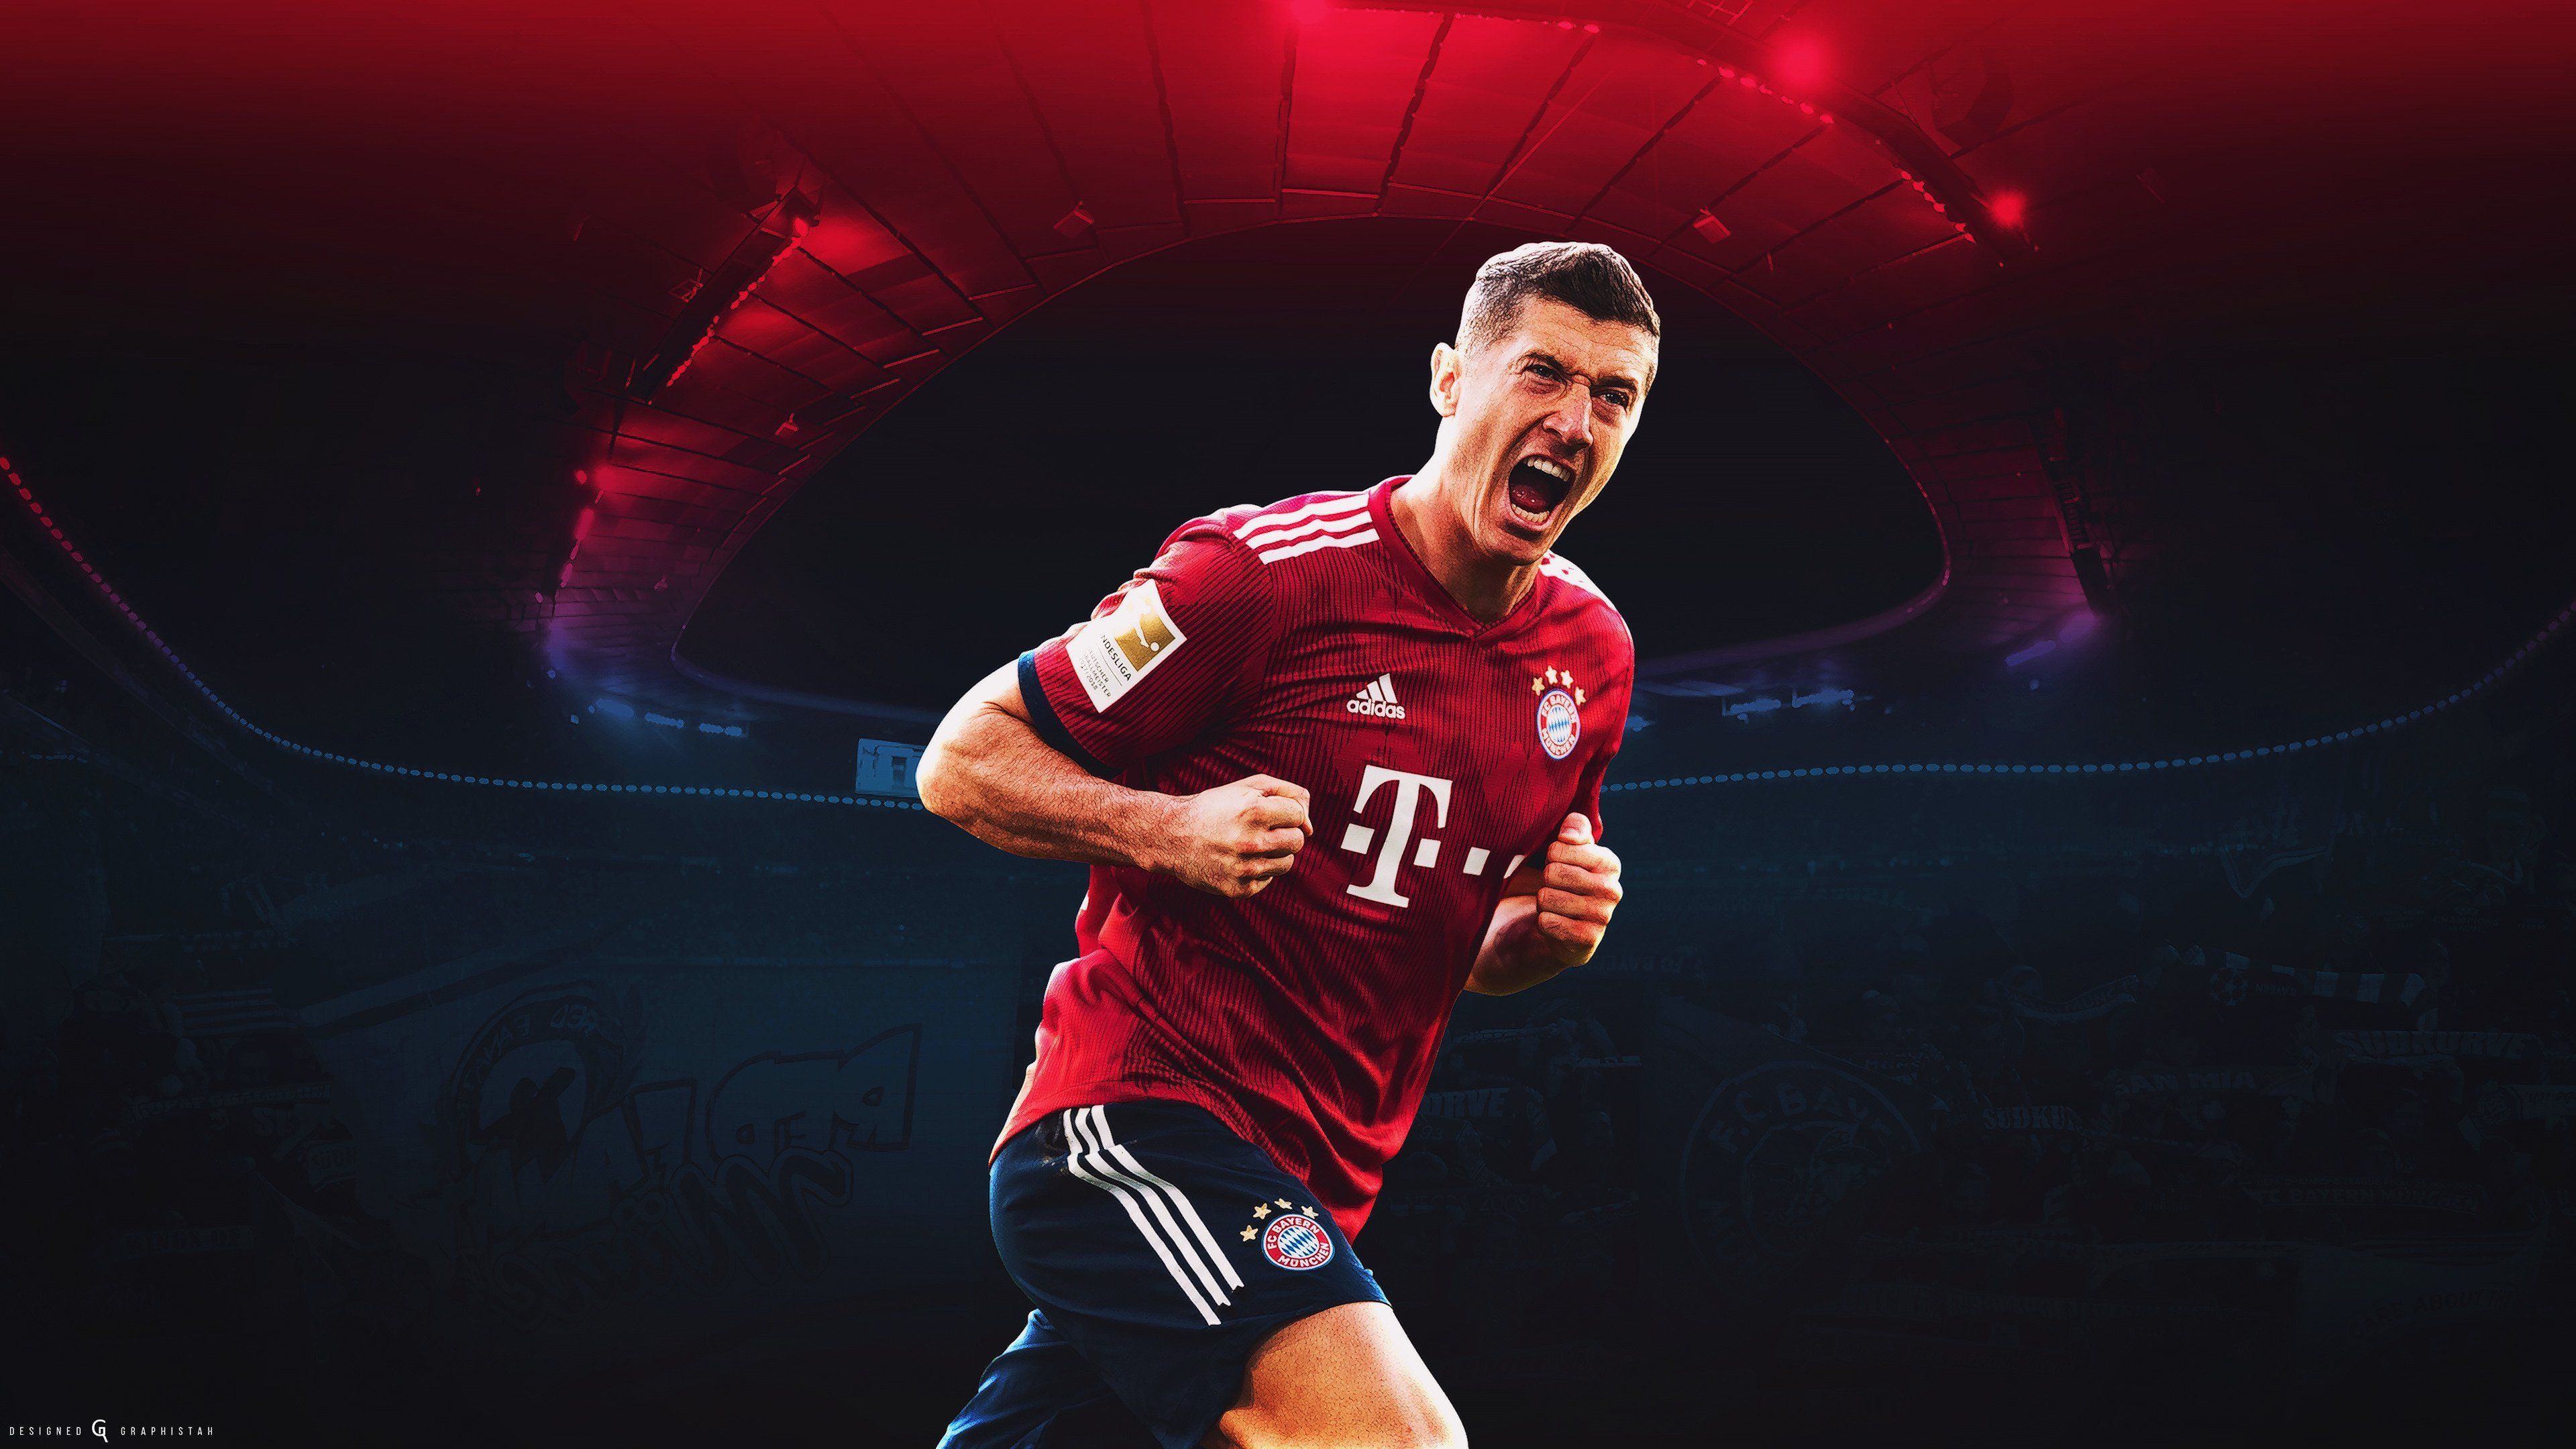 Lewandowski Hintergrundbild 3840x2160. HD desktop wallpaper: Sports, Soccer, Polish, Fc Bayern Munich, Robert Lewandowski download free picture